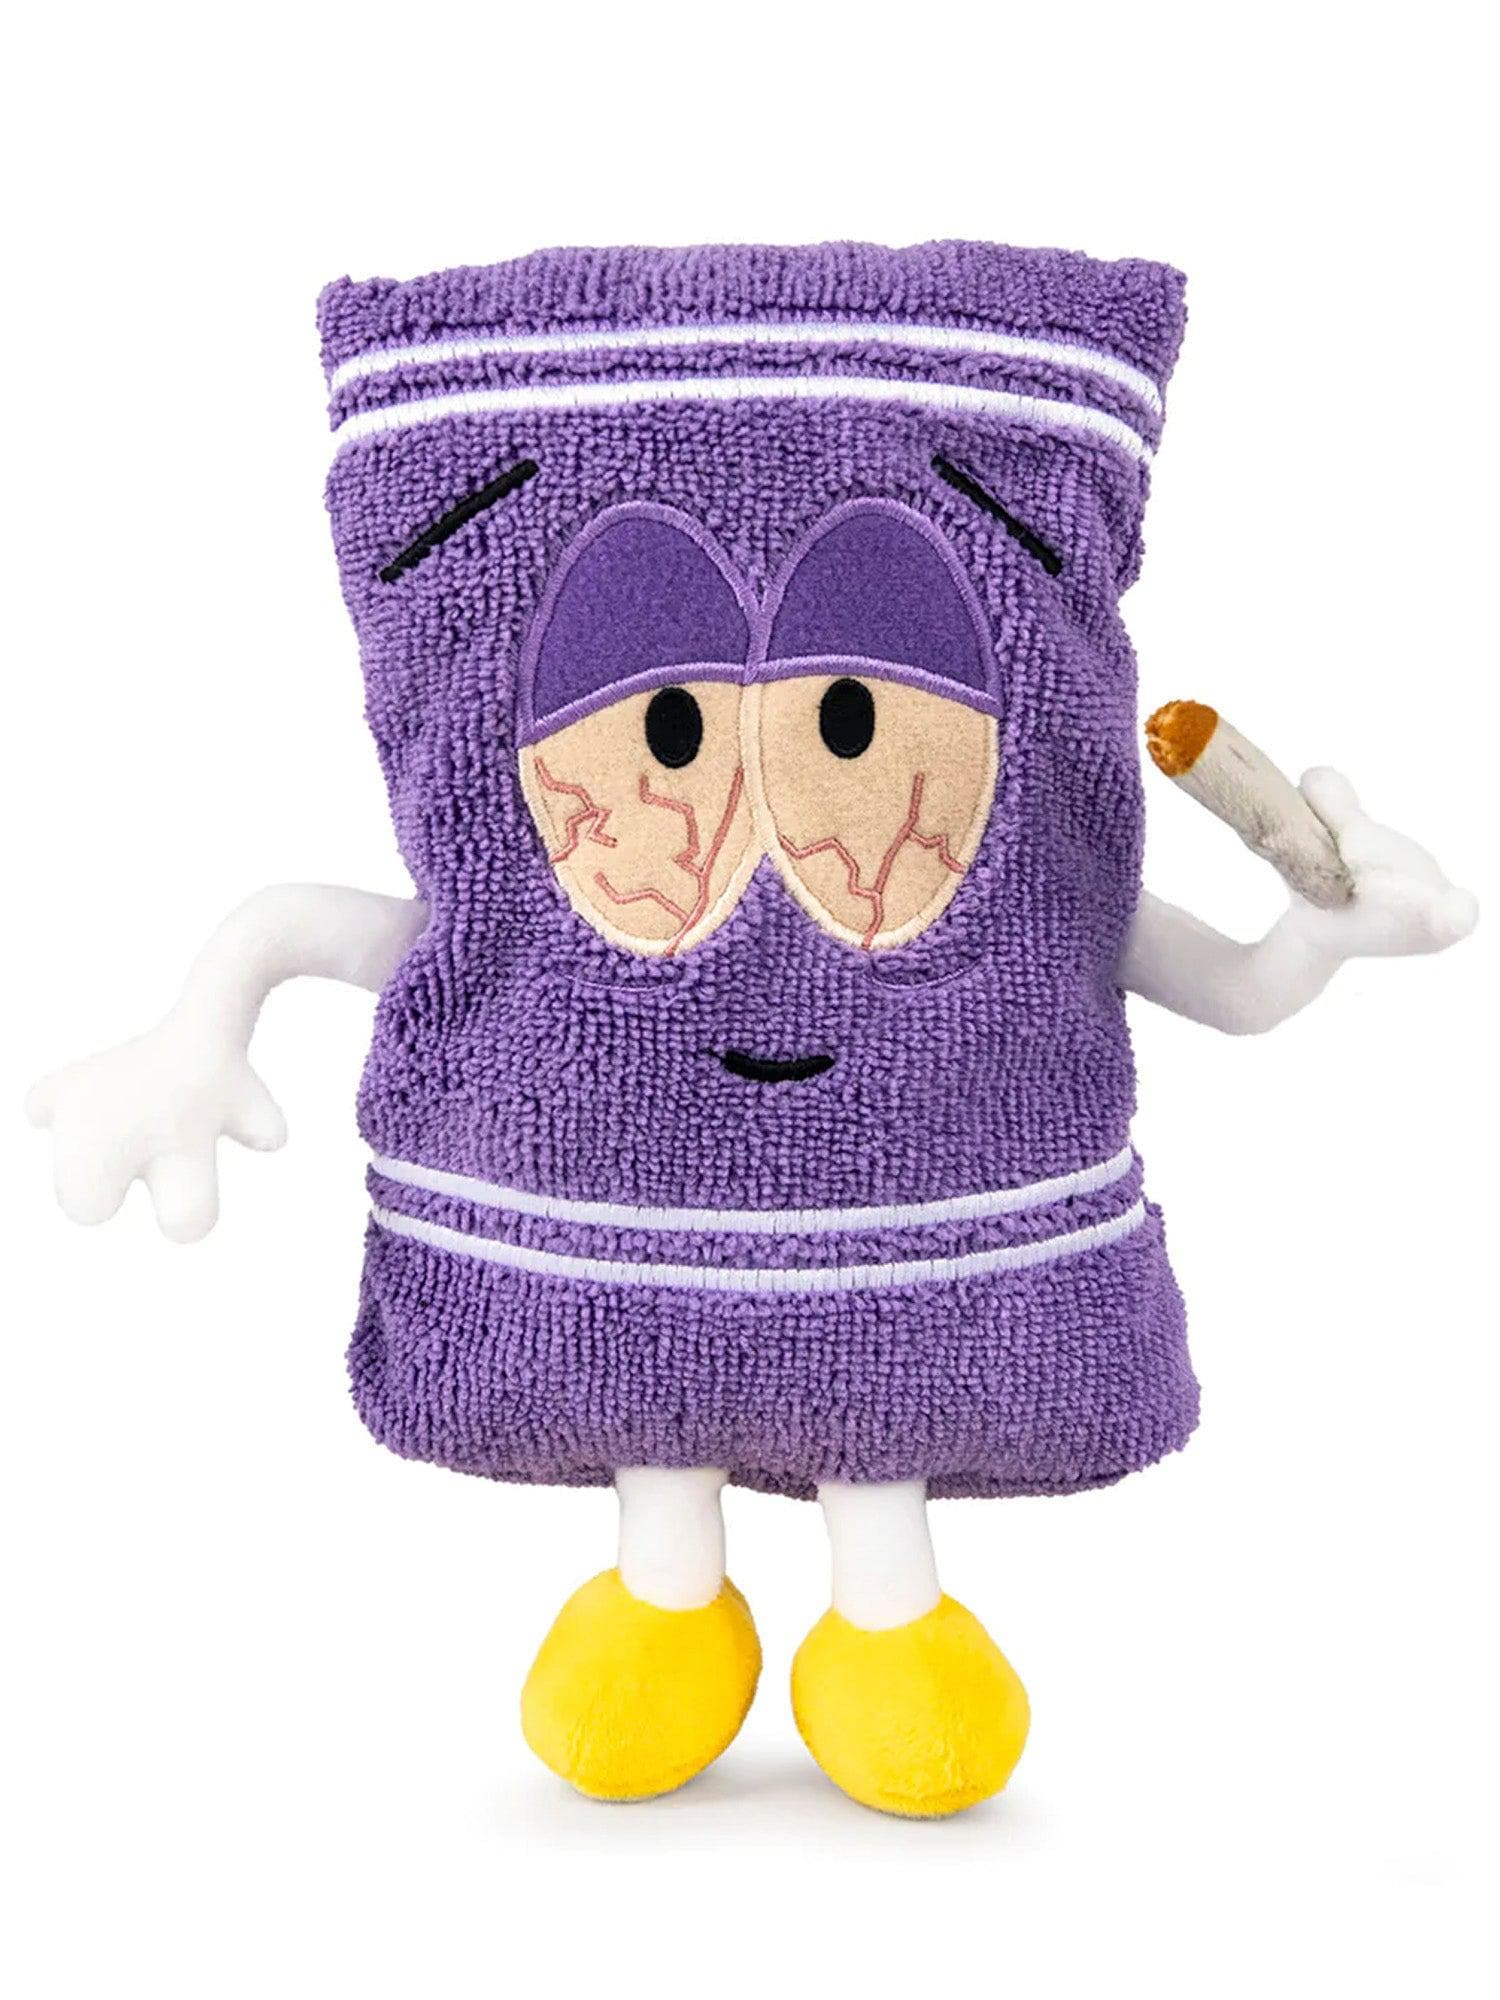 South Park 10" Stoned Towelie Plush by Kidrobot - costumes.com